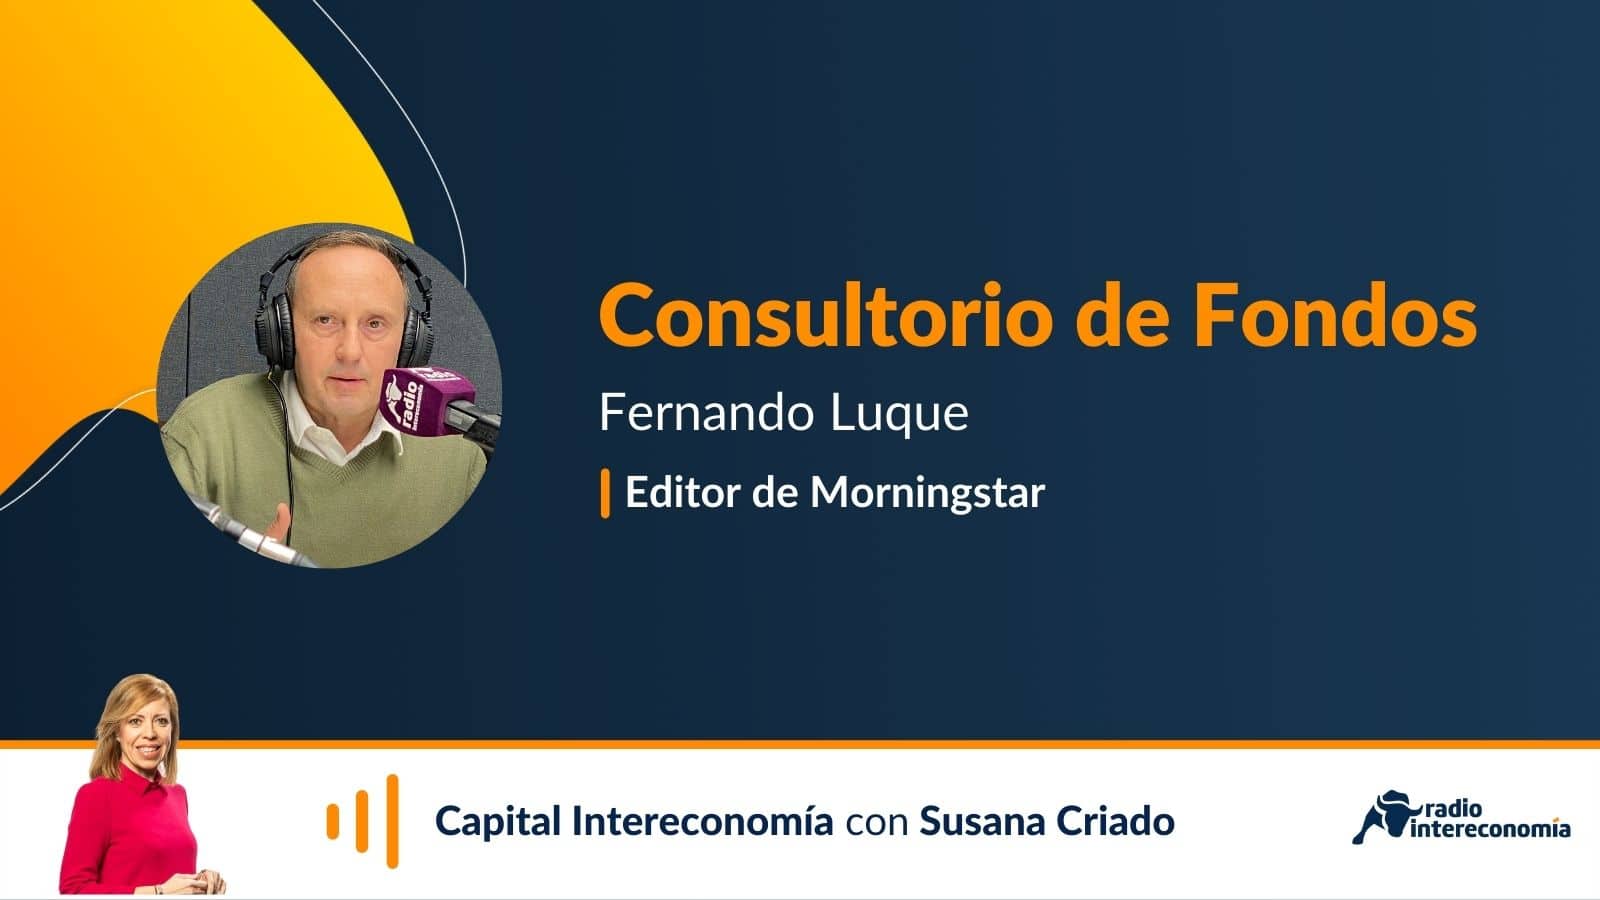  Consultorio de Fondos con Fernando Luque (Morningstar)